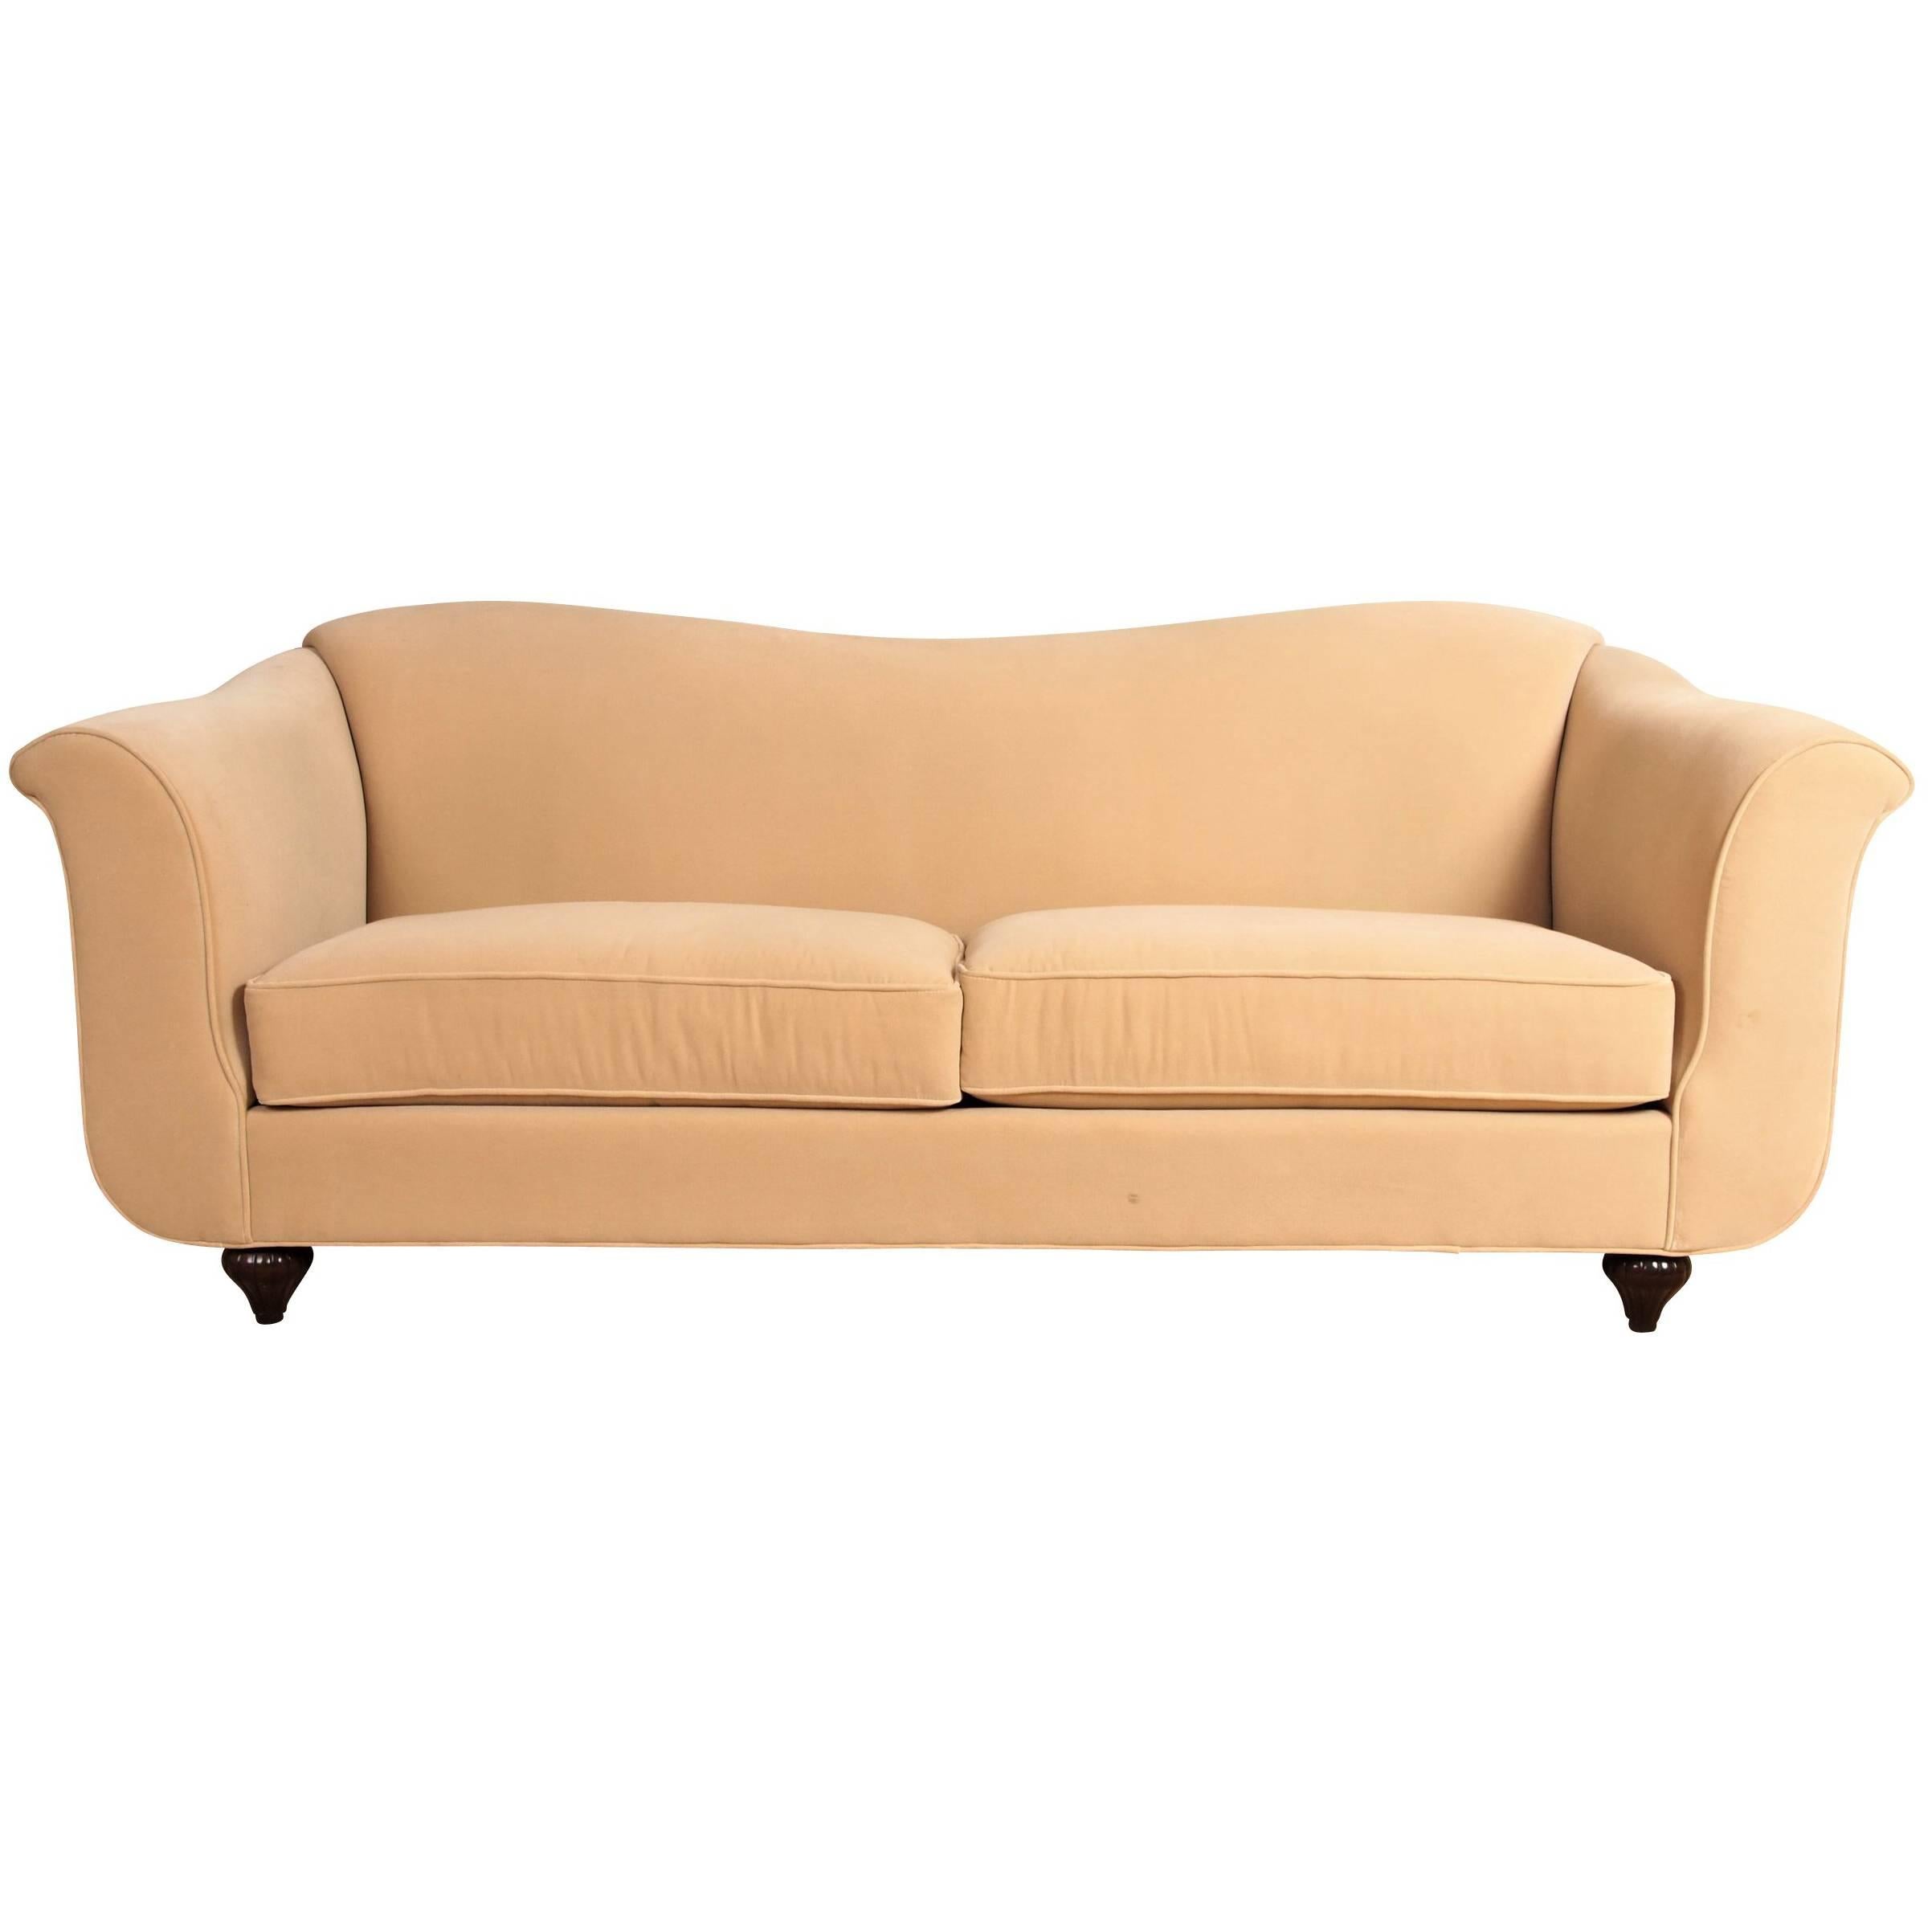 Kravet Fine Quality Two Cushion Sofa